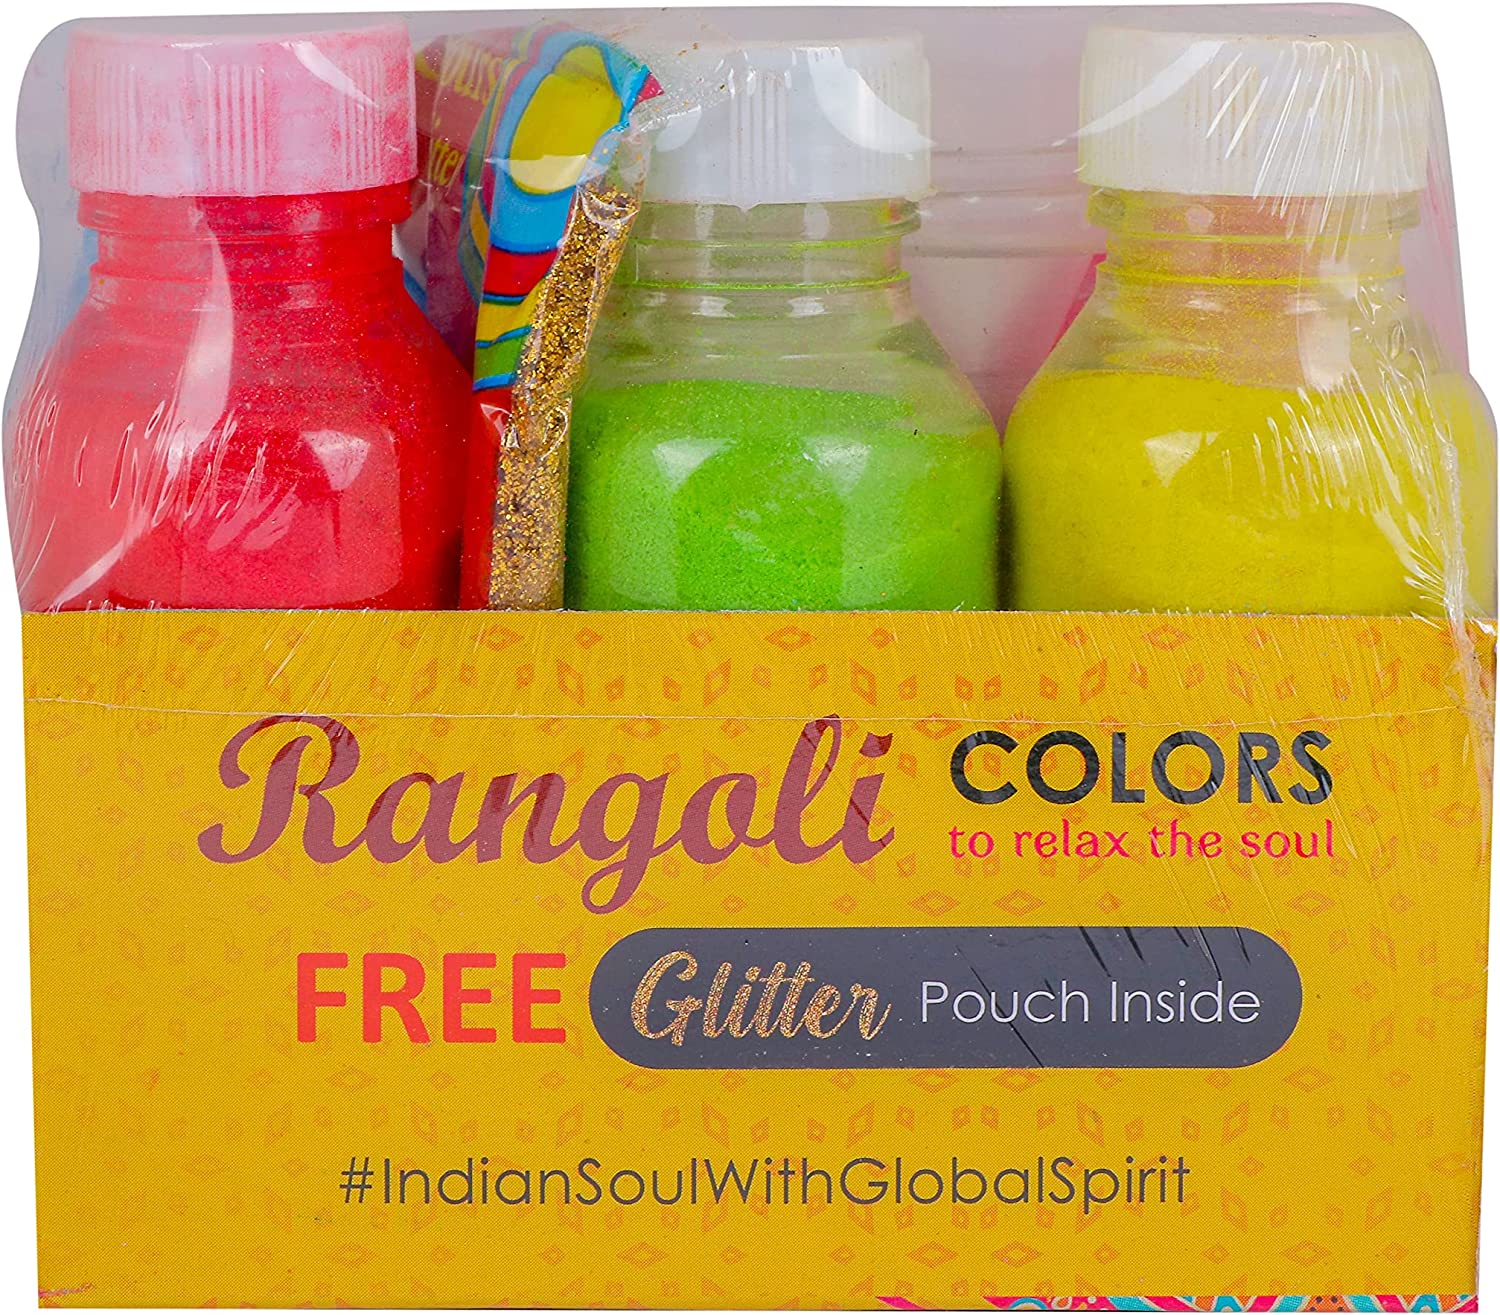  SATVIK 10 Shades of Rangoli Colors More Quantity Easy to Store  Glitter Rangoli Colours Kit (No GULAL) Festival/Festive Multi Colors Powder  Art Crafts Painting, Diwali Housewarming Return Gifts Items : Arts